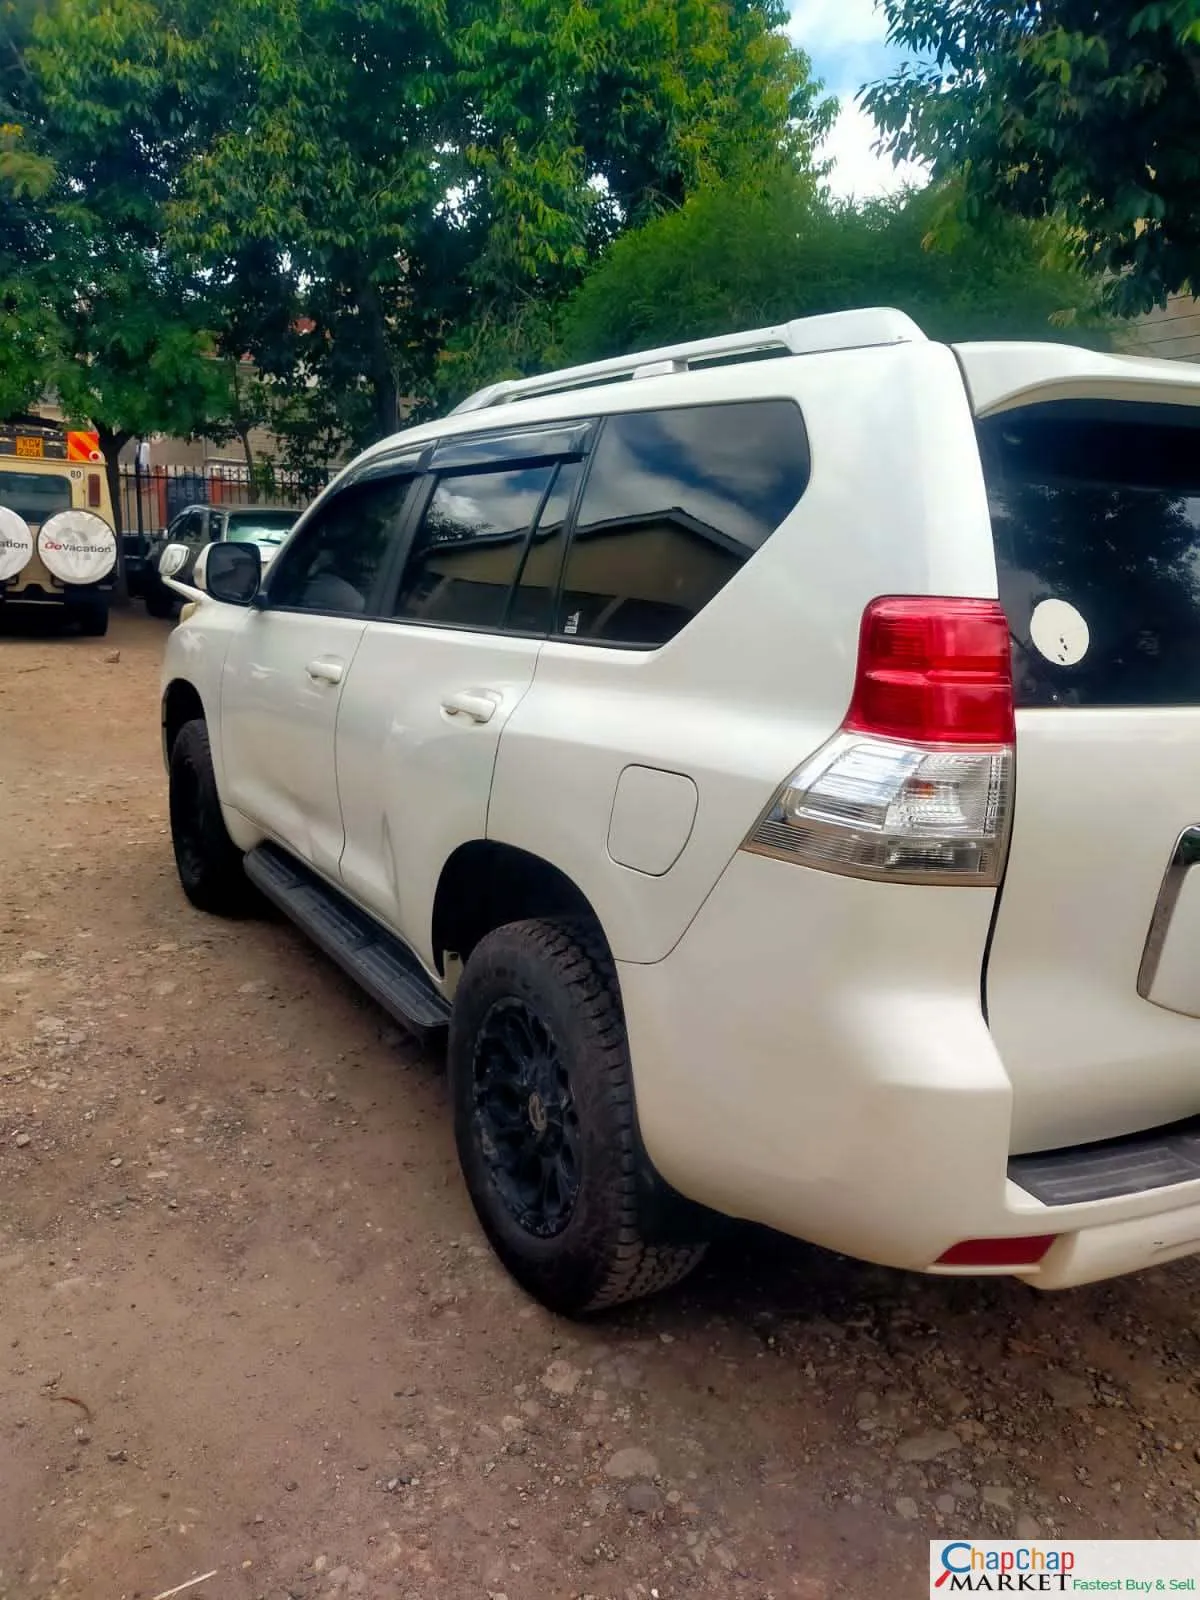 Toyota Prado J150 Kenya QUICKEST SALE 🔥 You Pay 40% Deposit Trade in OK EXCLUSIVE Toyota Prado for sale in kenya hire purchase installments